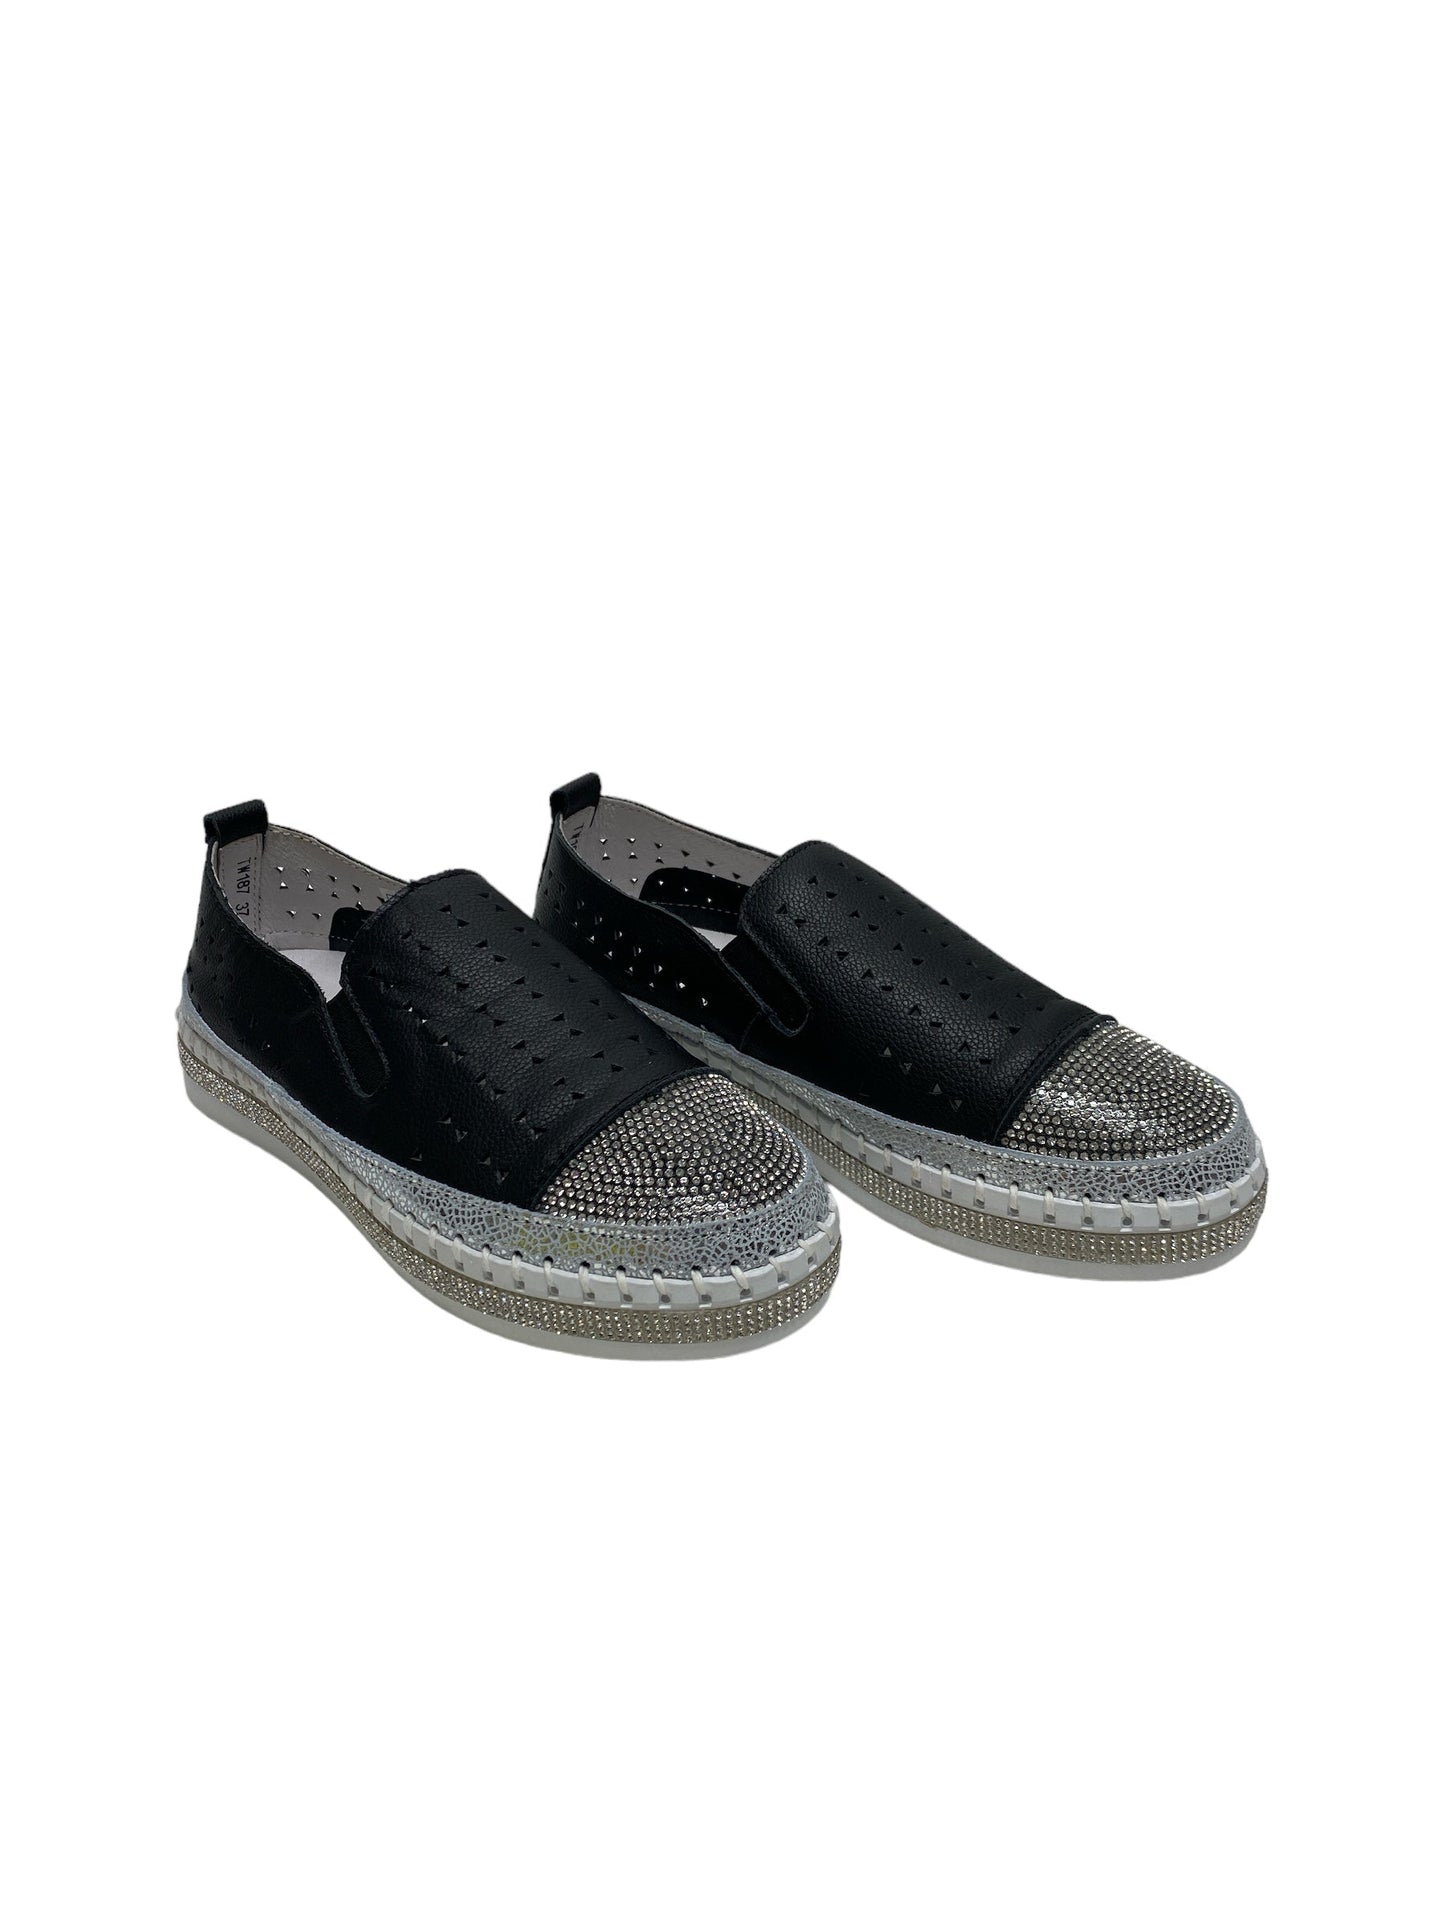 Black Shoes Sneakers Bernie Mev, Size 6.5